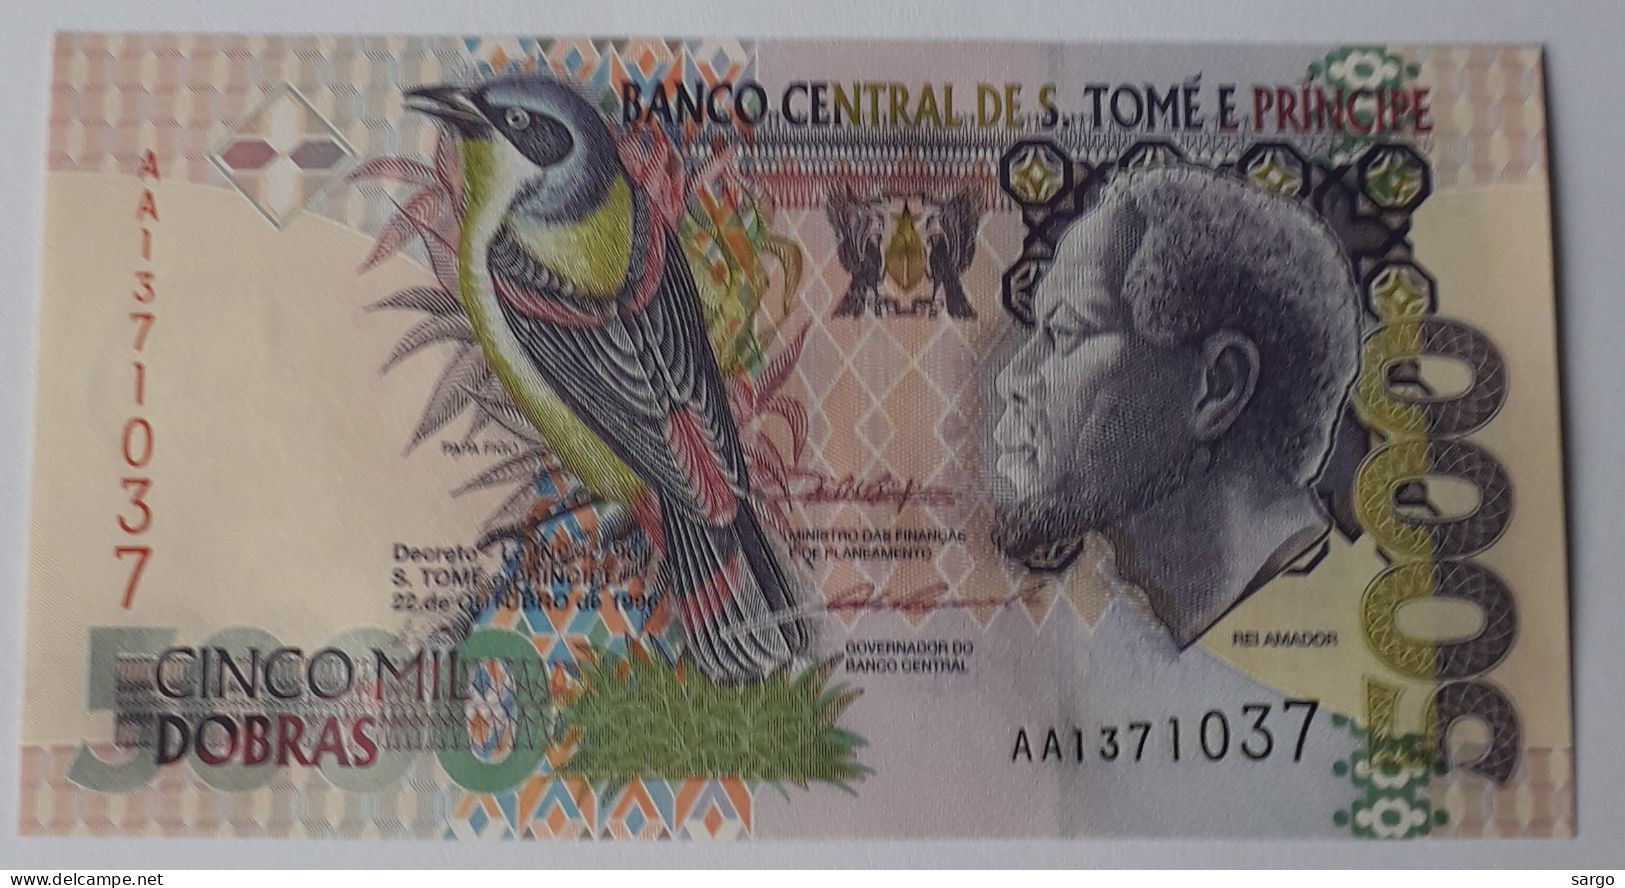 SAINT THOMAS AND PRINCIPE  - 5.000 DOLLARS - P 65  (1996) - UNC -  BANKNOTES - PAPER MONEY - Sao Tome En Principe